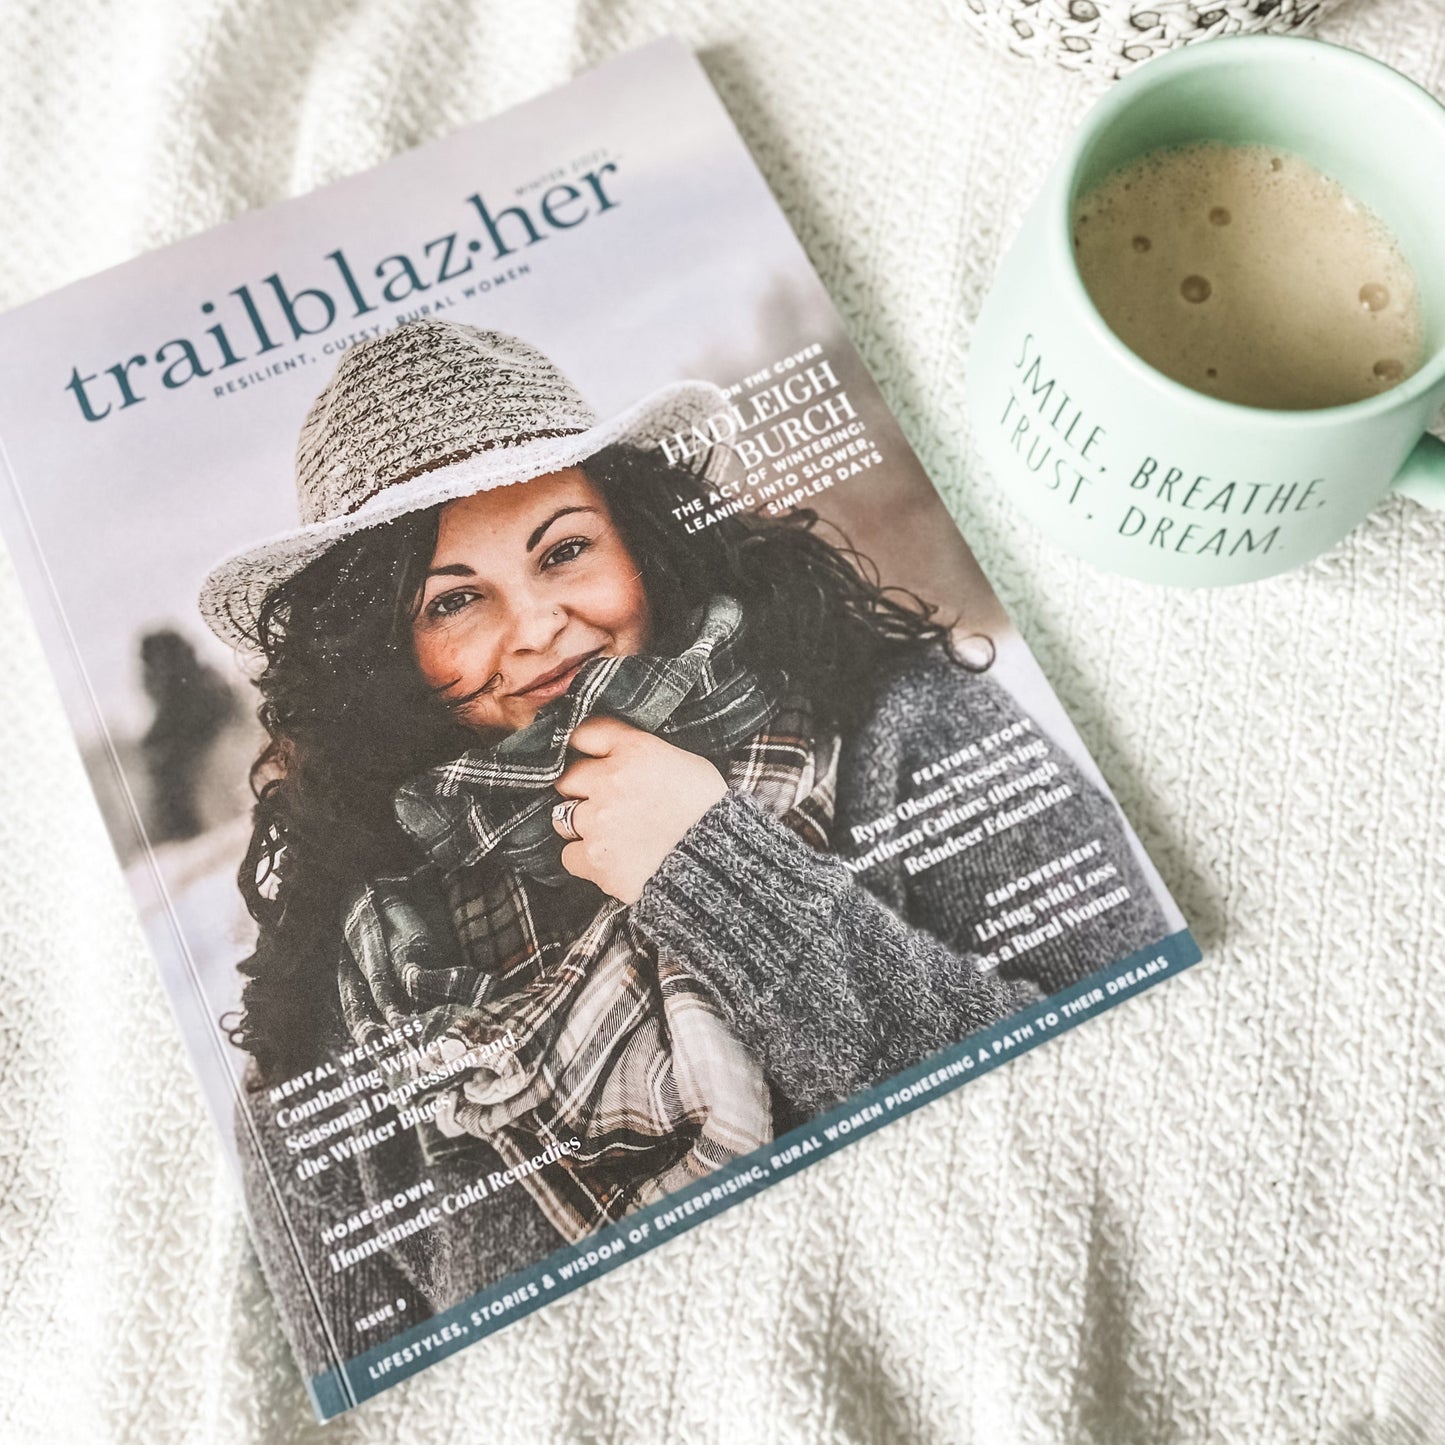 Trailblazher magazine flatlay next to green coffee mug with quote "smile, breathe, trust, dream"